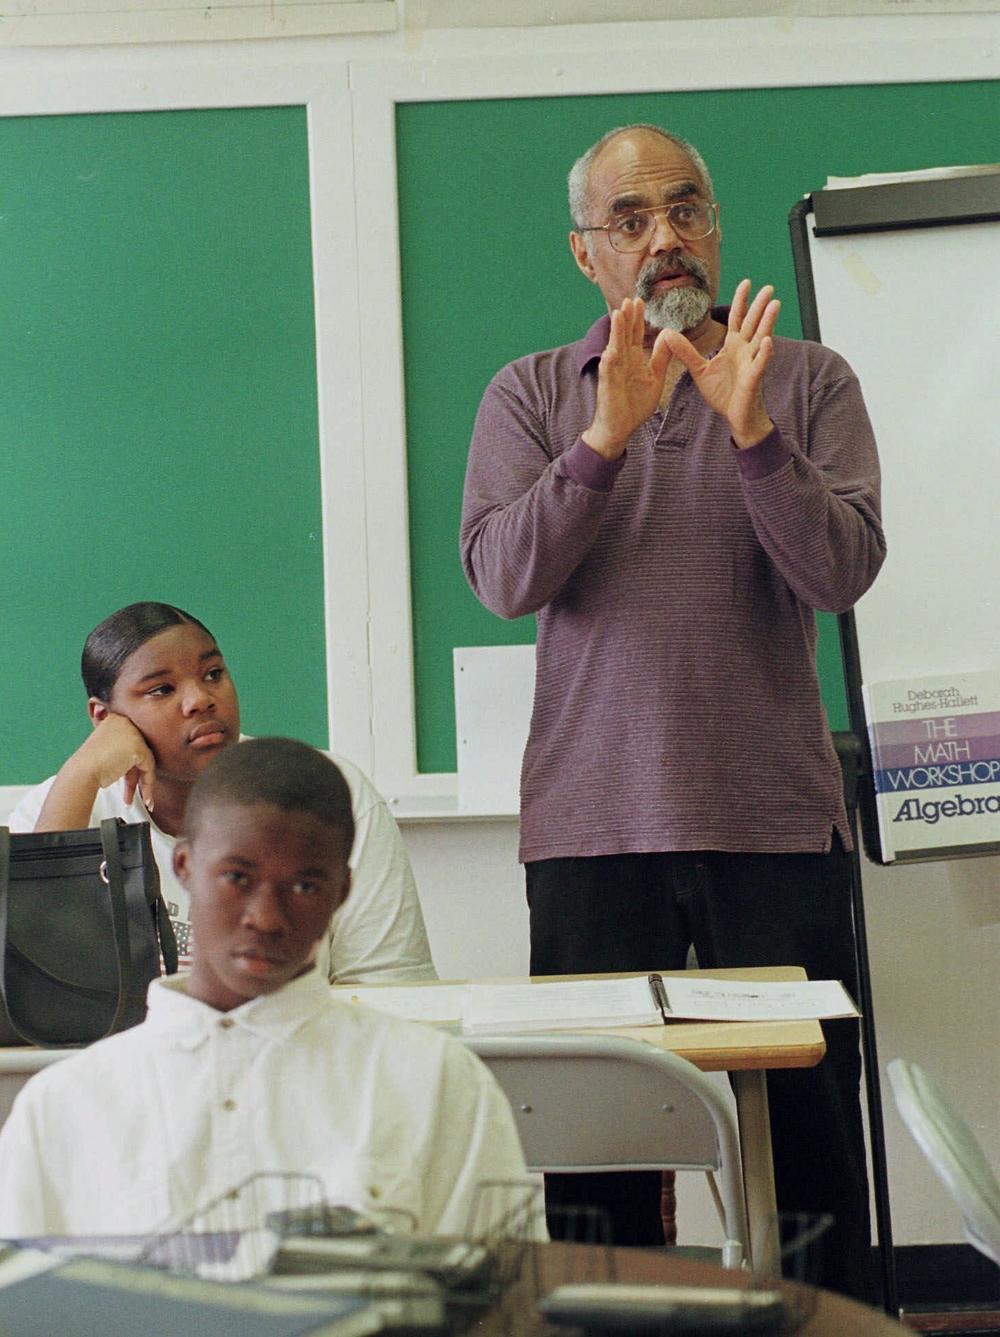 Moses teaches an algebra class at Lanier High School in Jackson, Miss., in 1990.